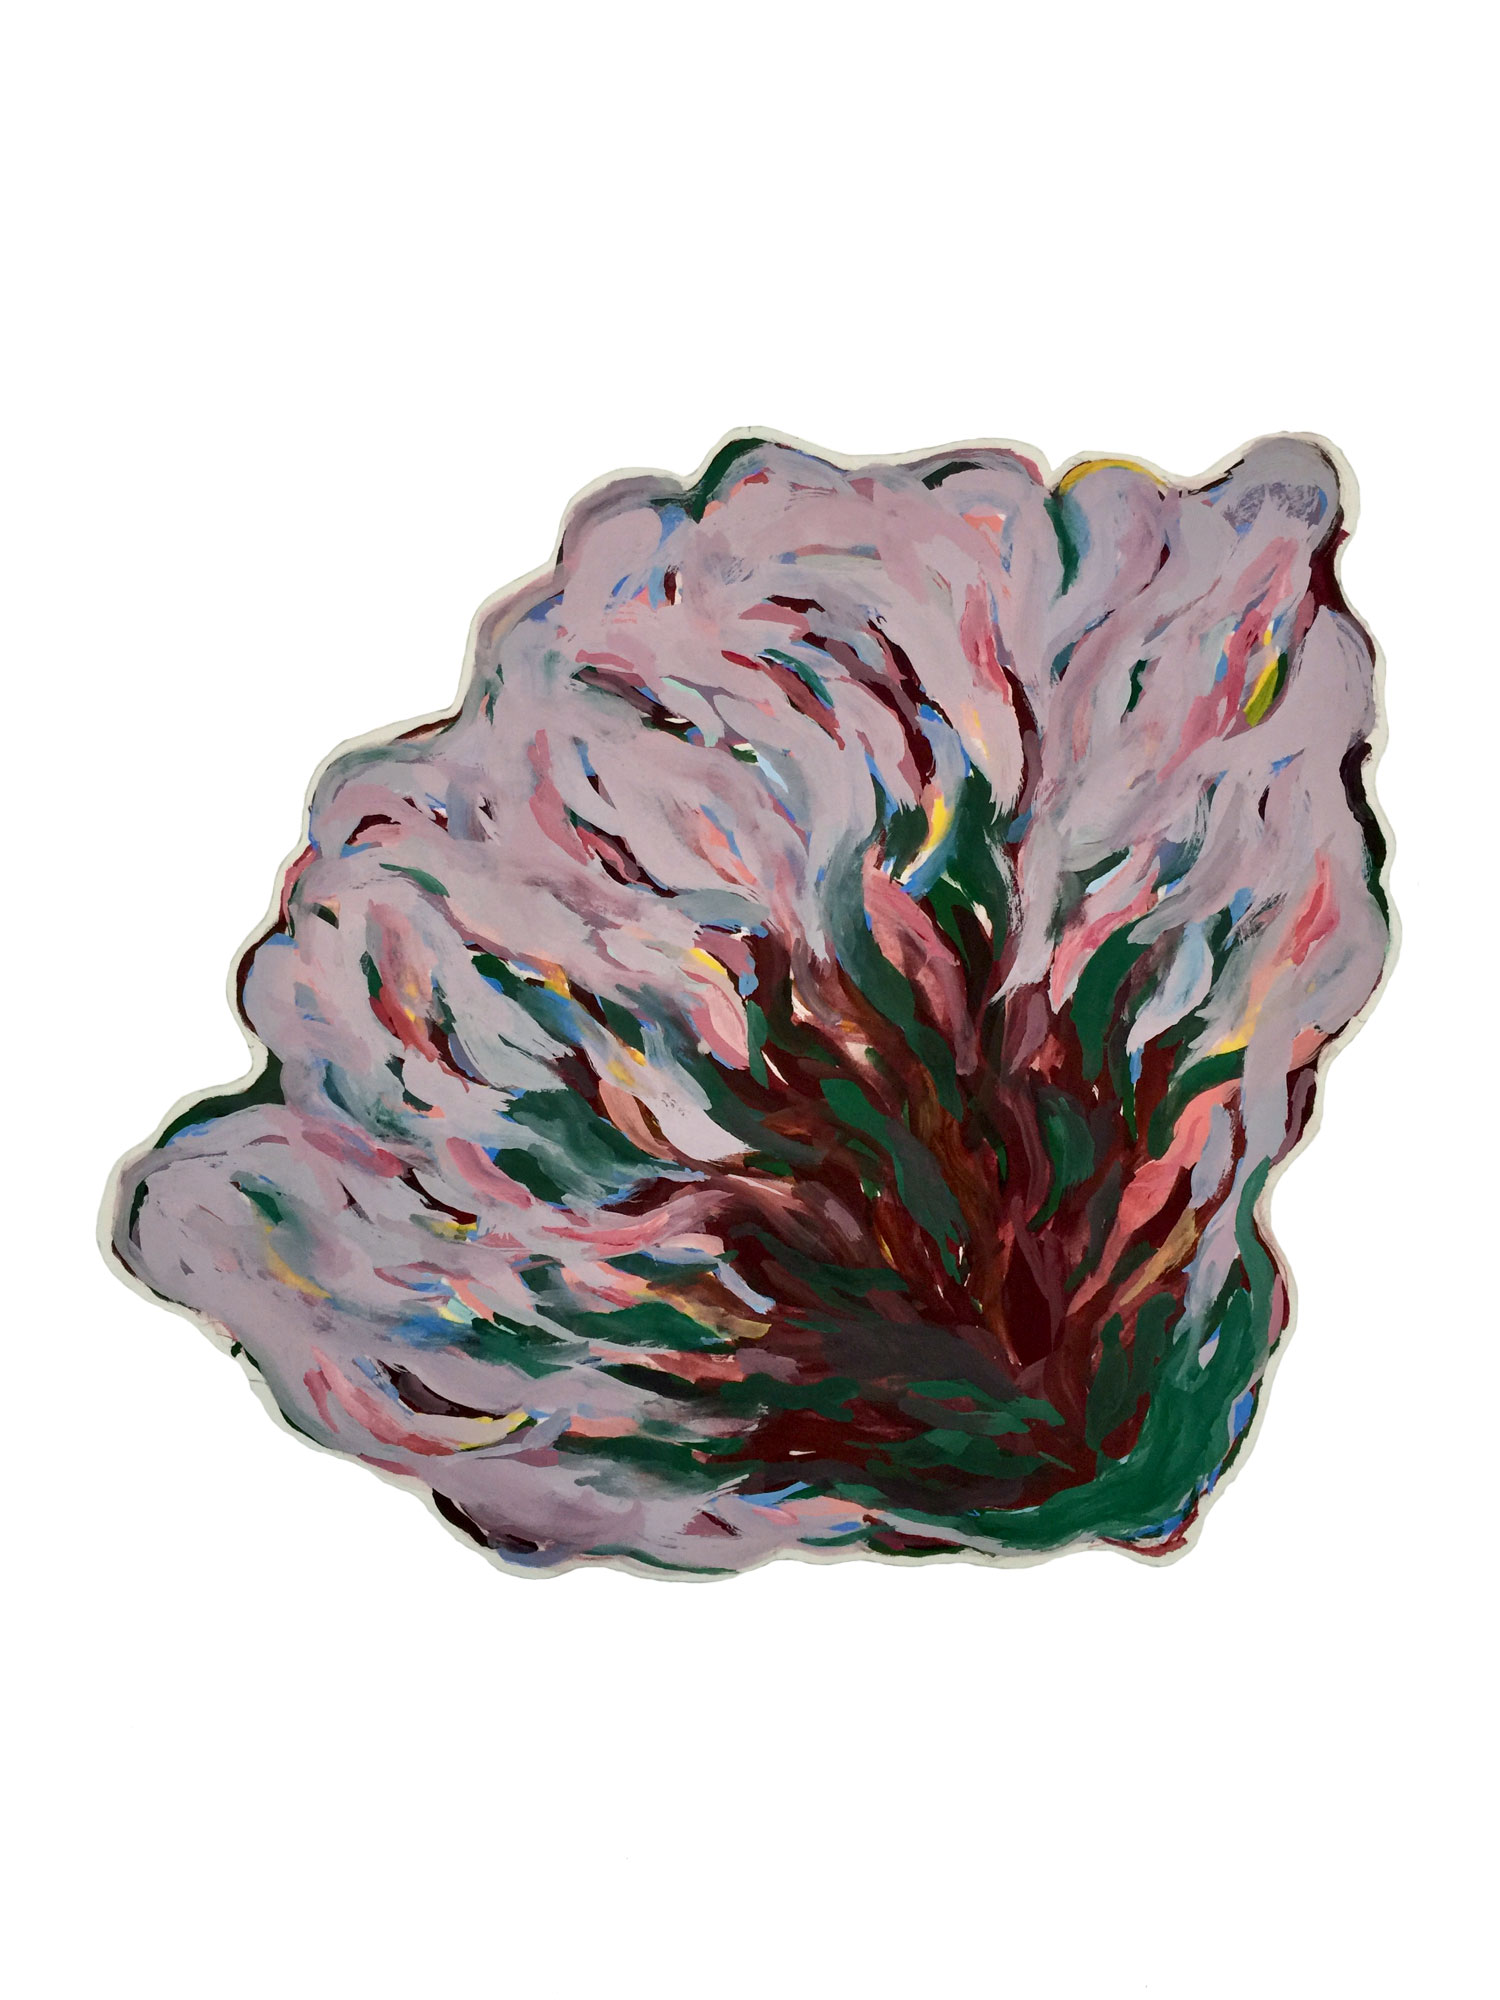 Untiled (Chrysanthemum)